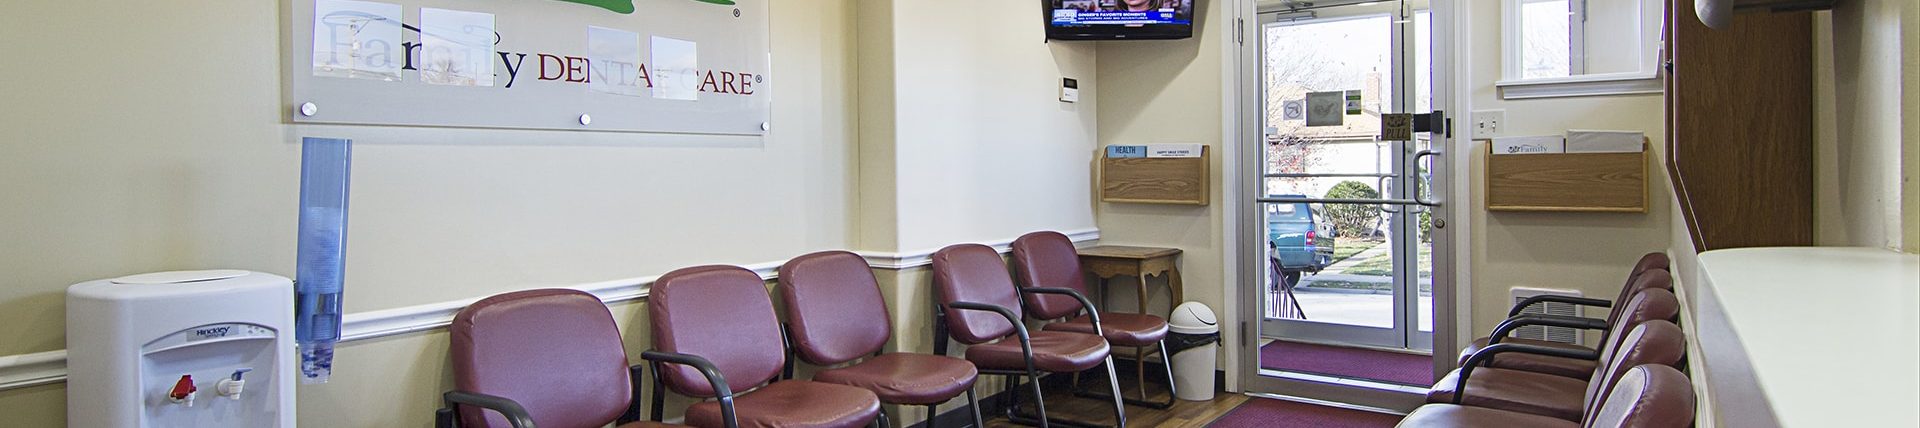 Calumet City Office Waiting Area - Family Dental Care